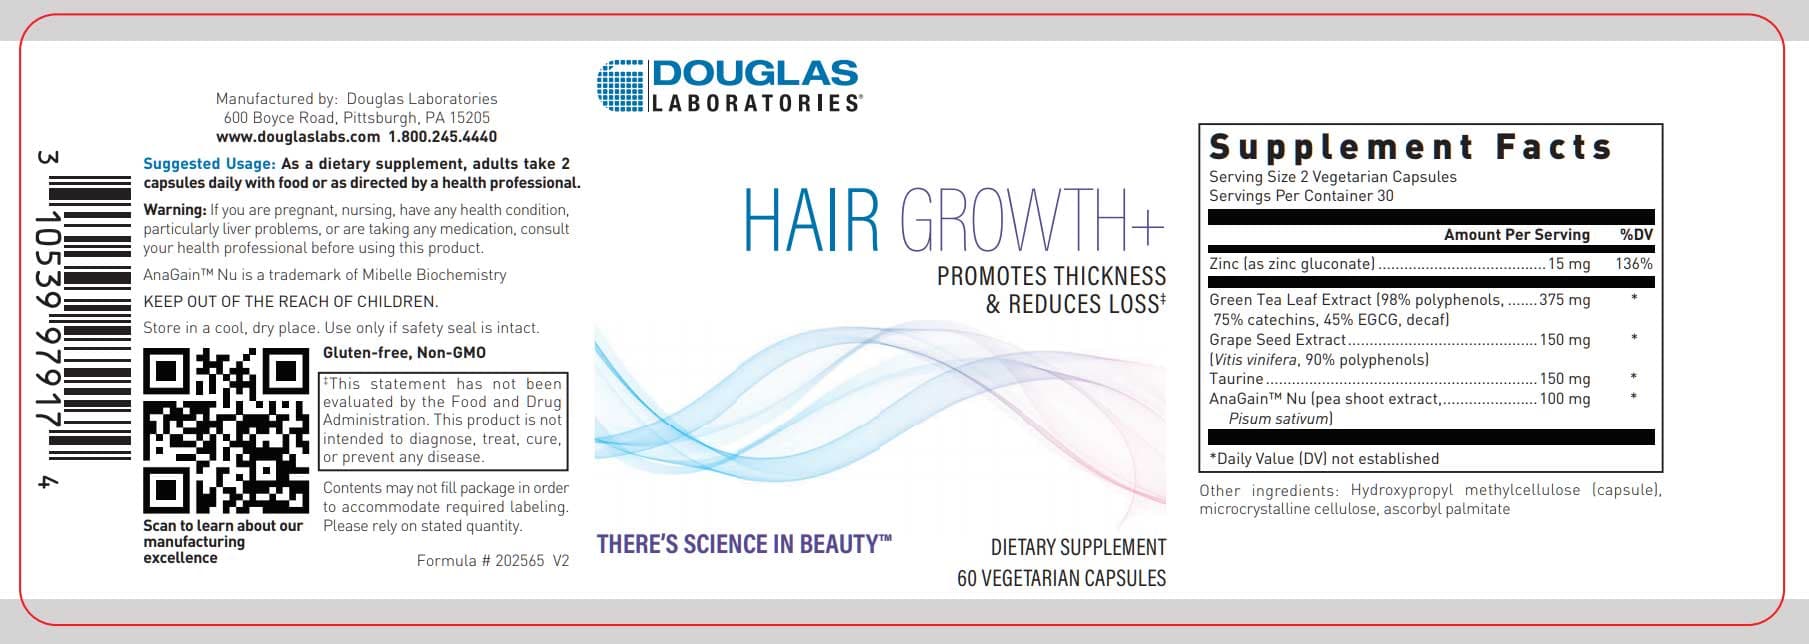 Douglas Laboratories Hair Growth+ Label